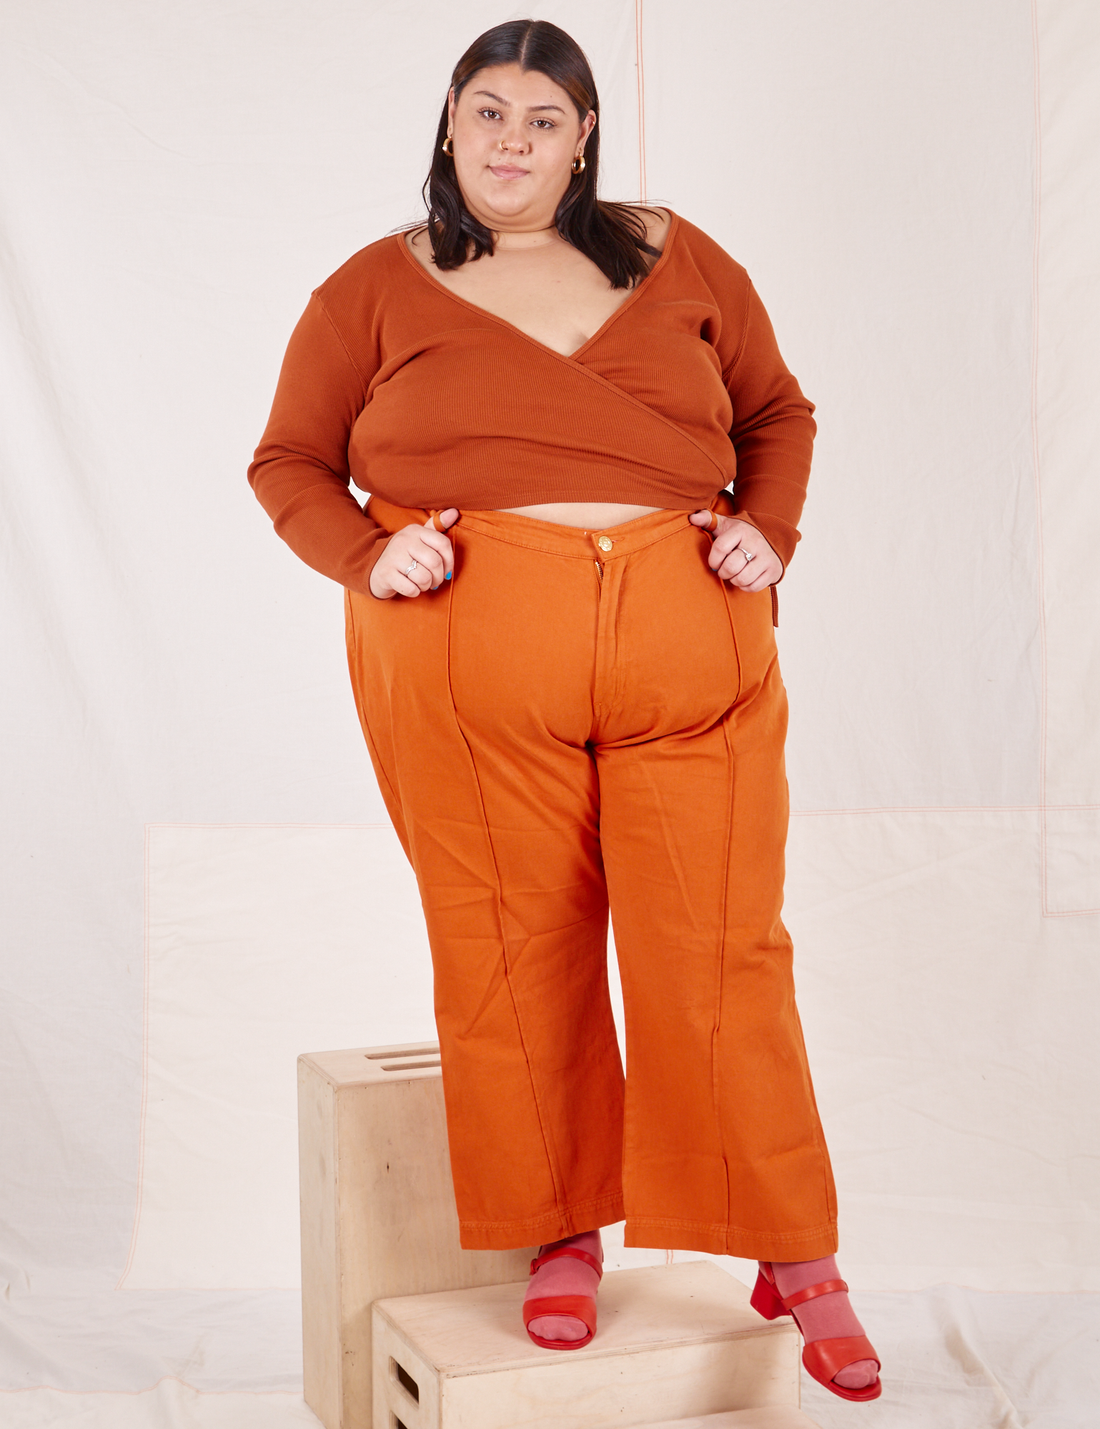 Wrap Top in Burnt Terracotta on Sarita wearing burnt orange Western Pants